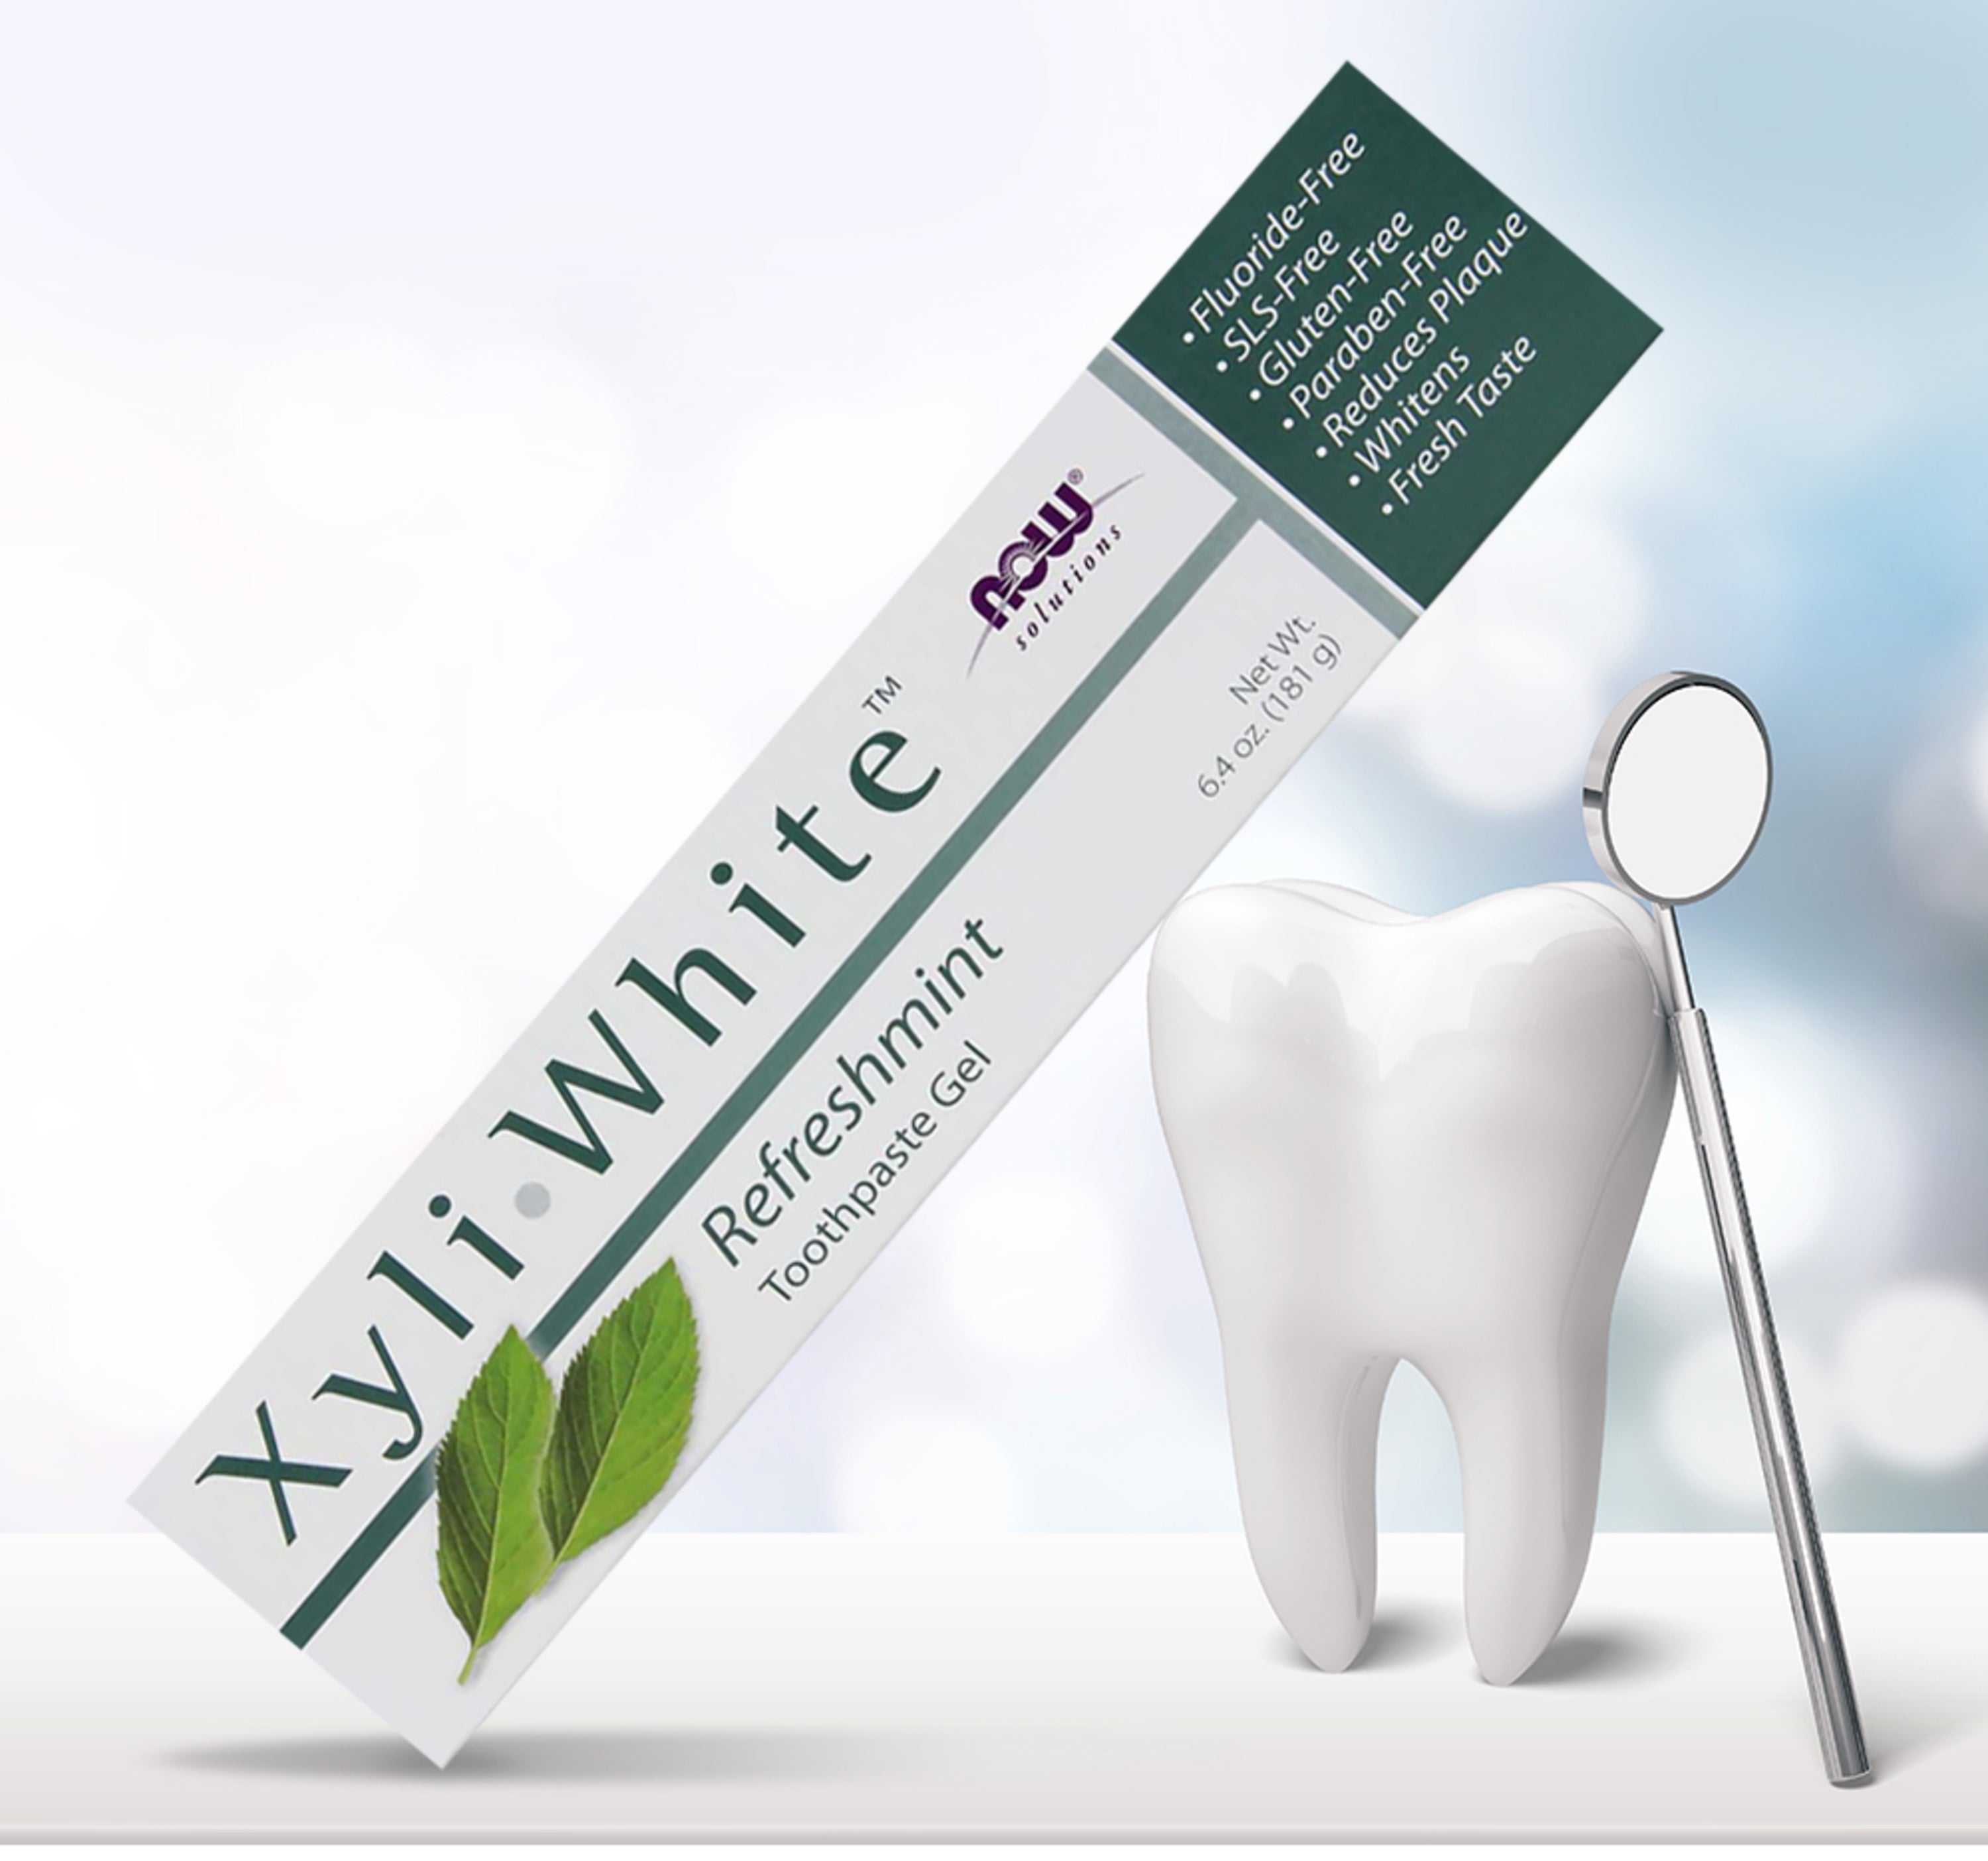 Xyliwhite Refreshmint Toothpaste Gel, 6.4 oz (181 g) Tube